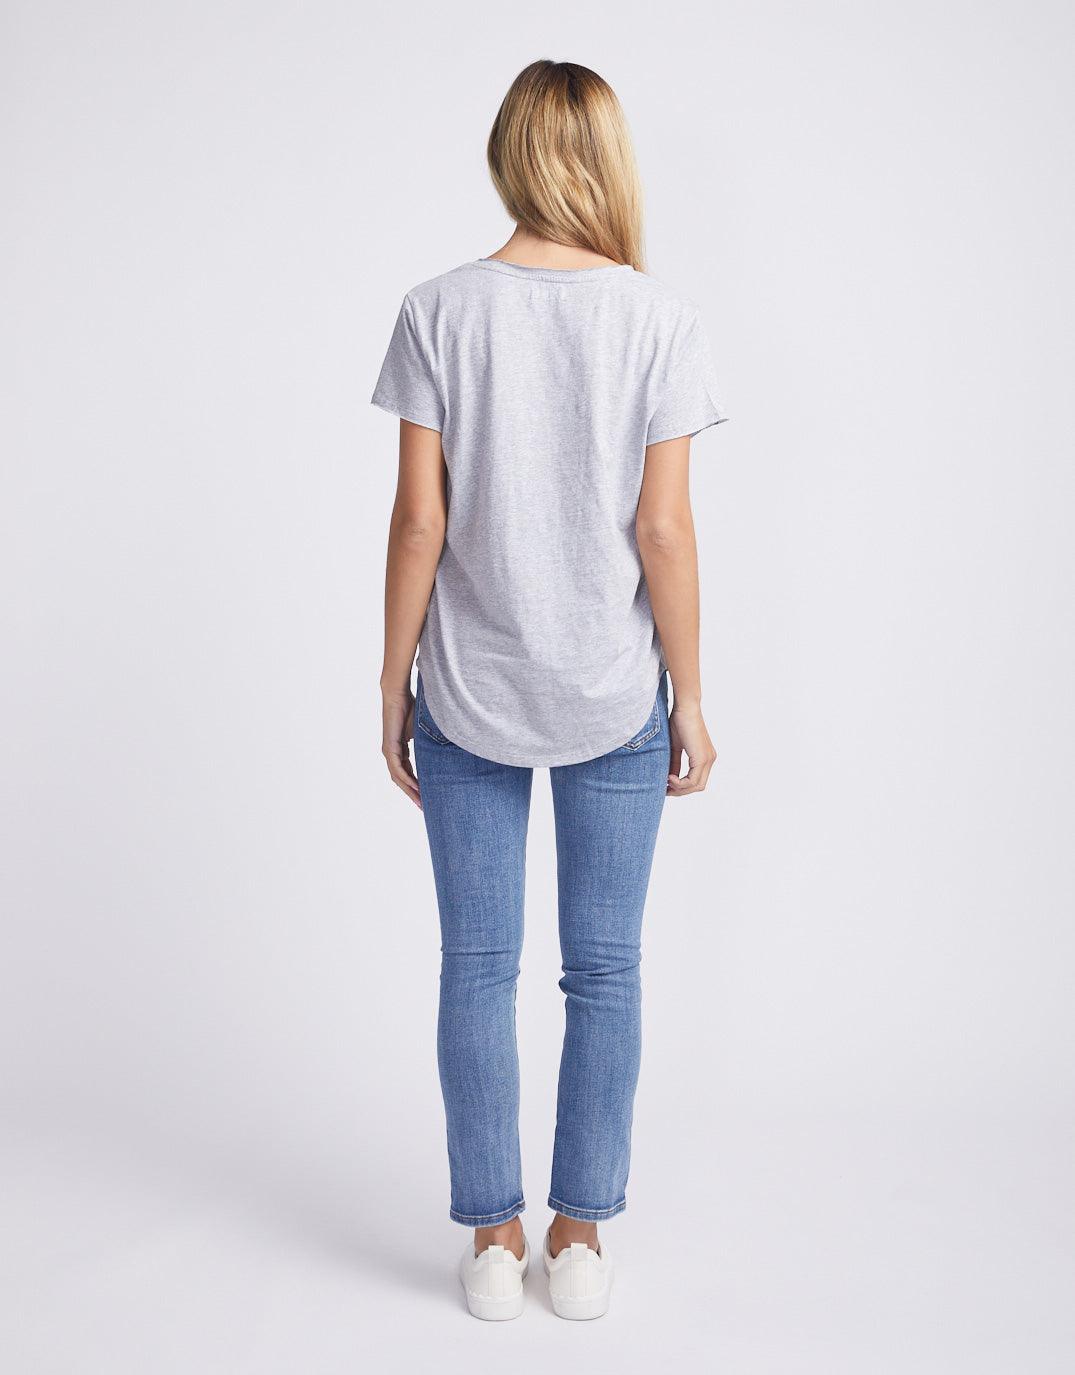 White & Co. - Original V Neck T-Shirt - Grey Marle - White & Co Living Tops